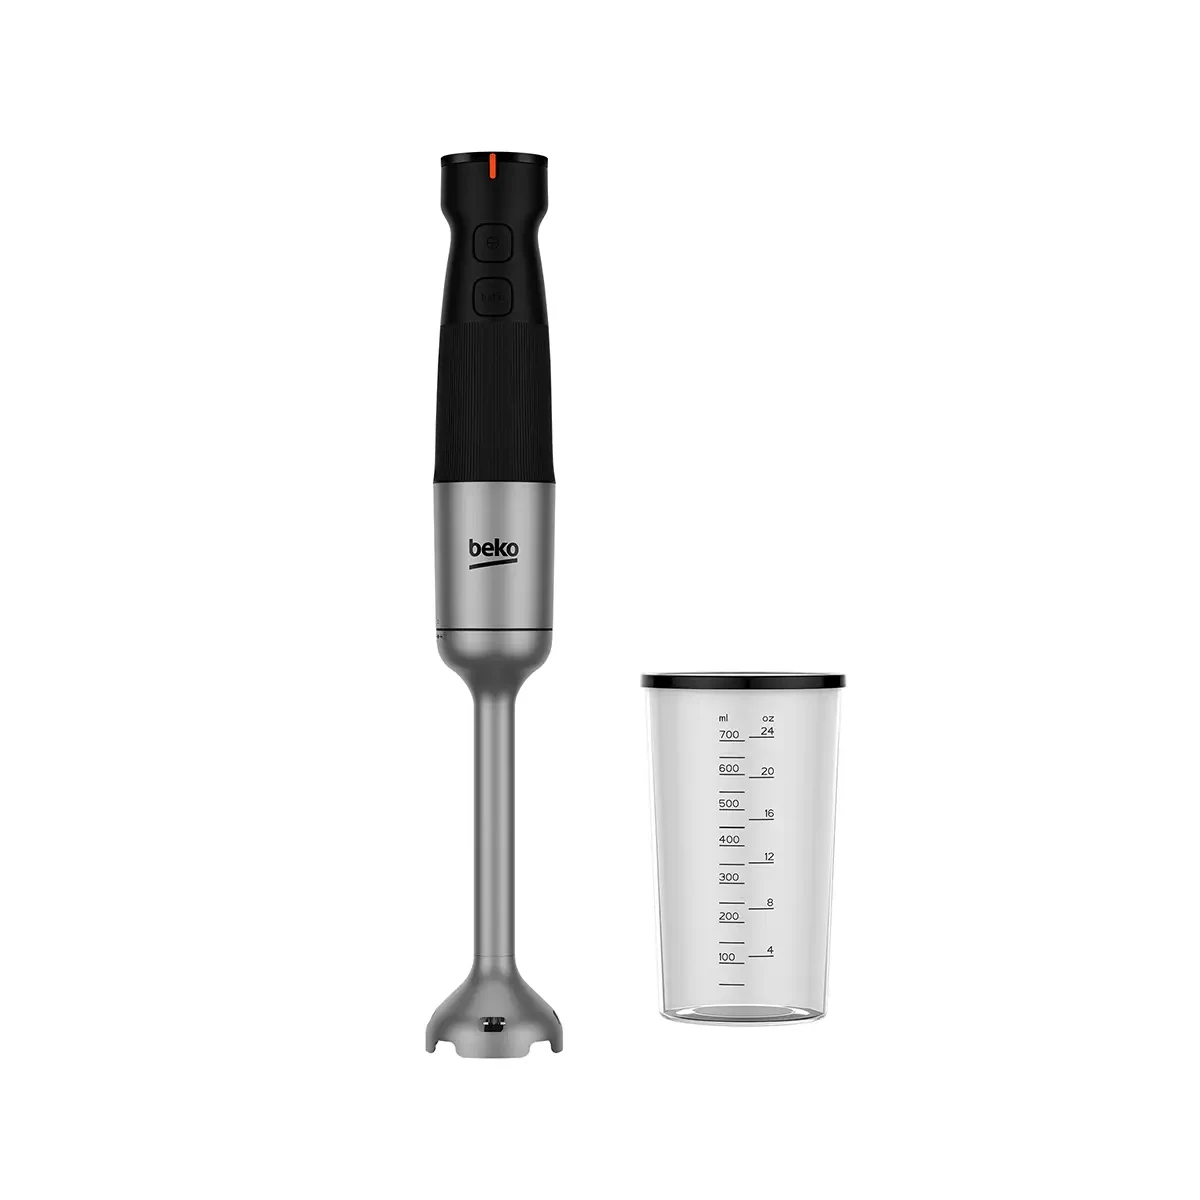 Beko Hand Blender - black x stainless - 750 Watt - 12 speeds & turbo function - 1L glass chopping bowl - beater attachment